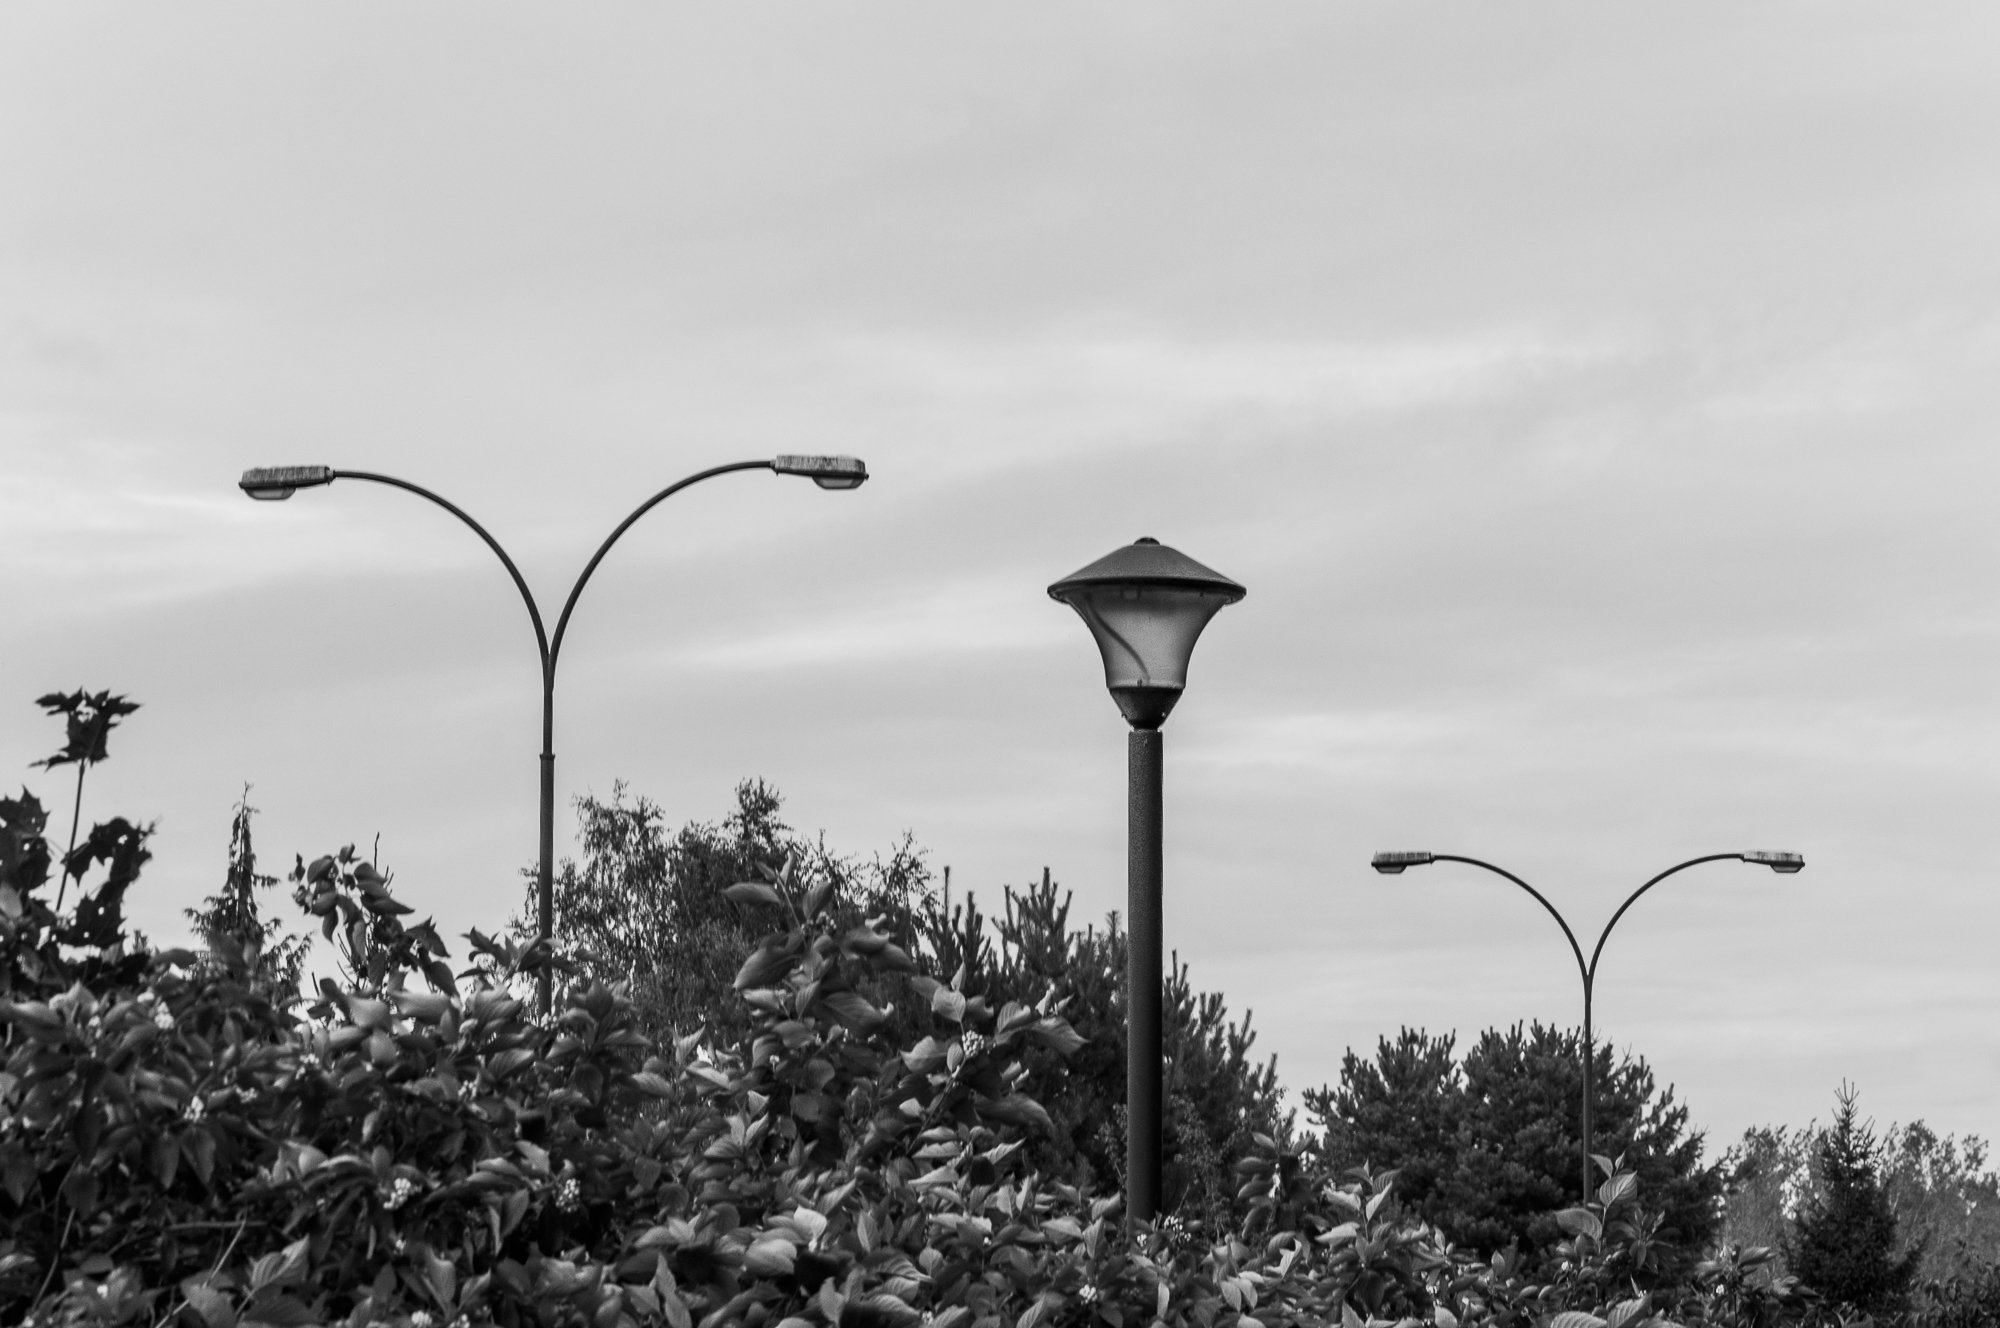 Adam Mazek Photography Warsaw 2018. Minimalism. Street lamps.